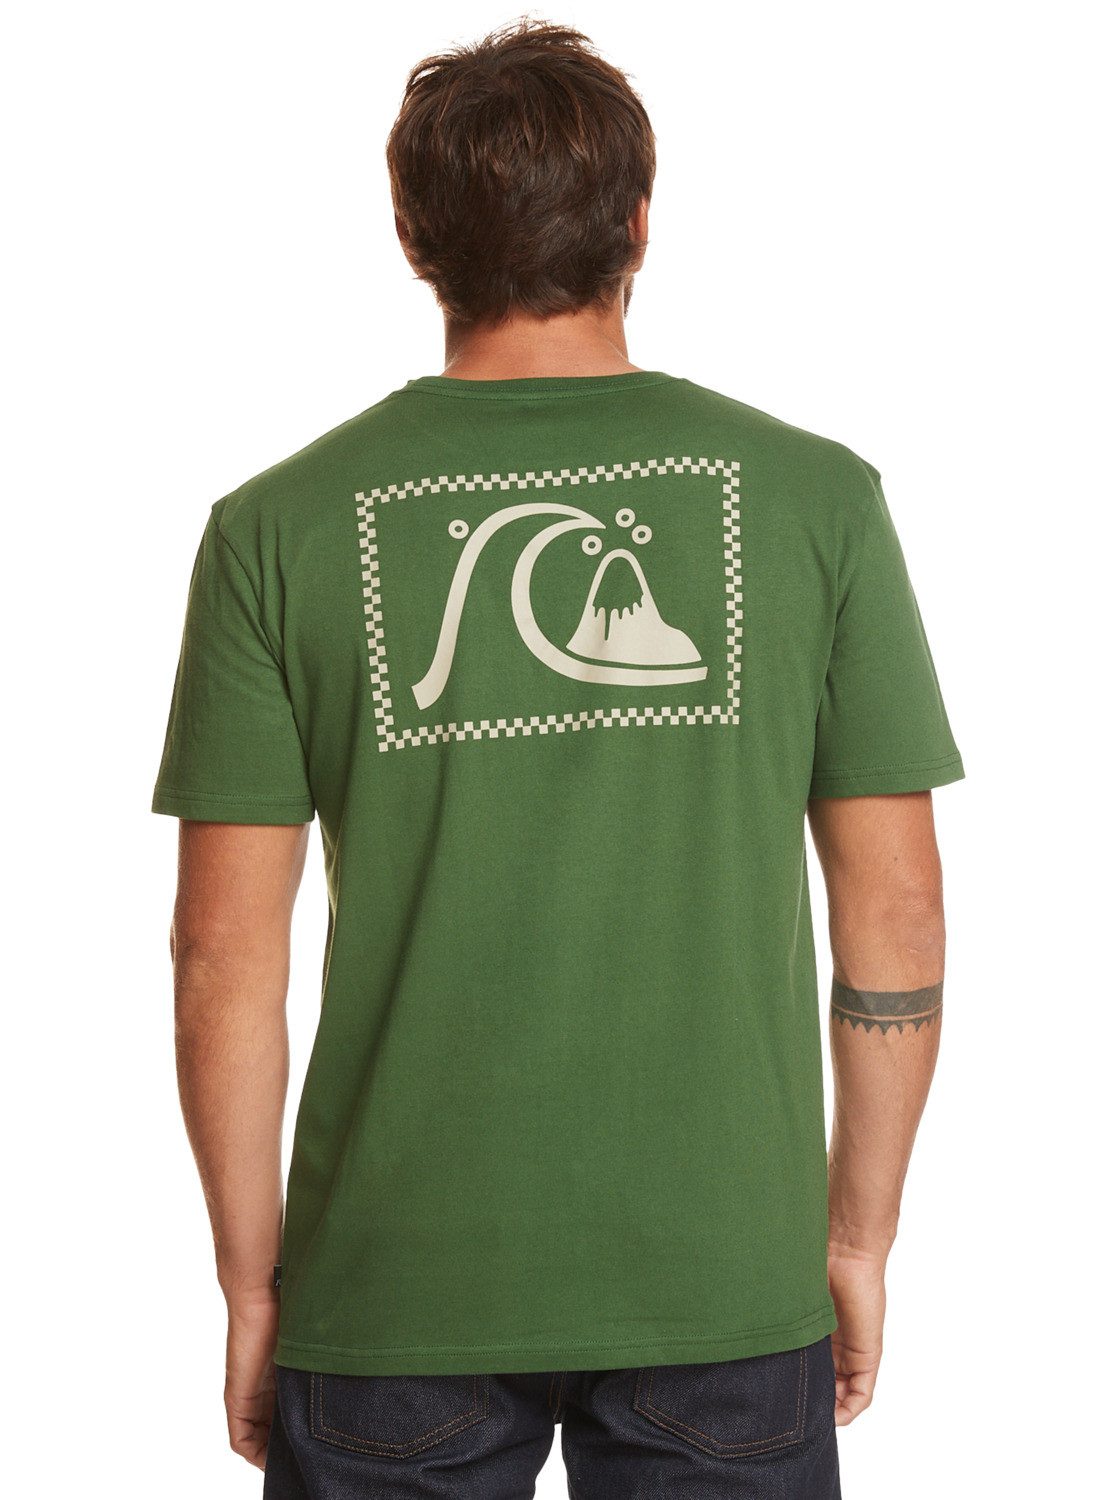 Greener Original T-Shirt Quiksilver The Pastures